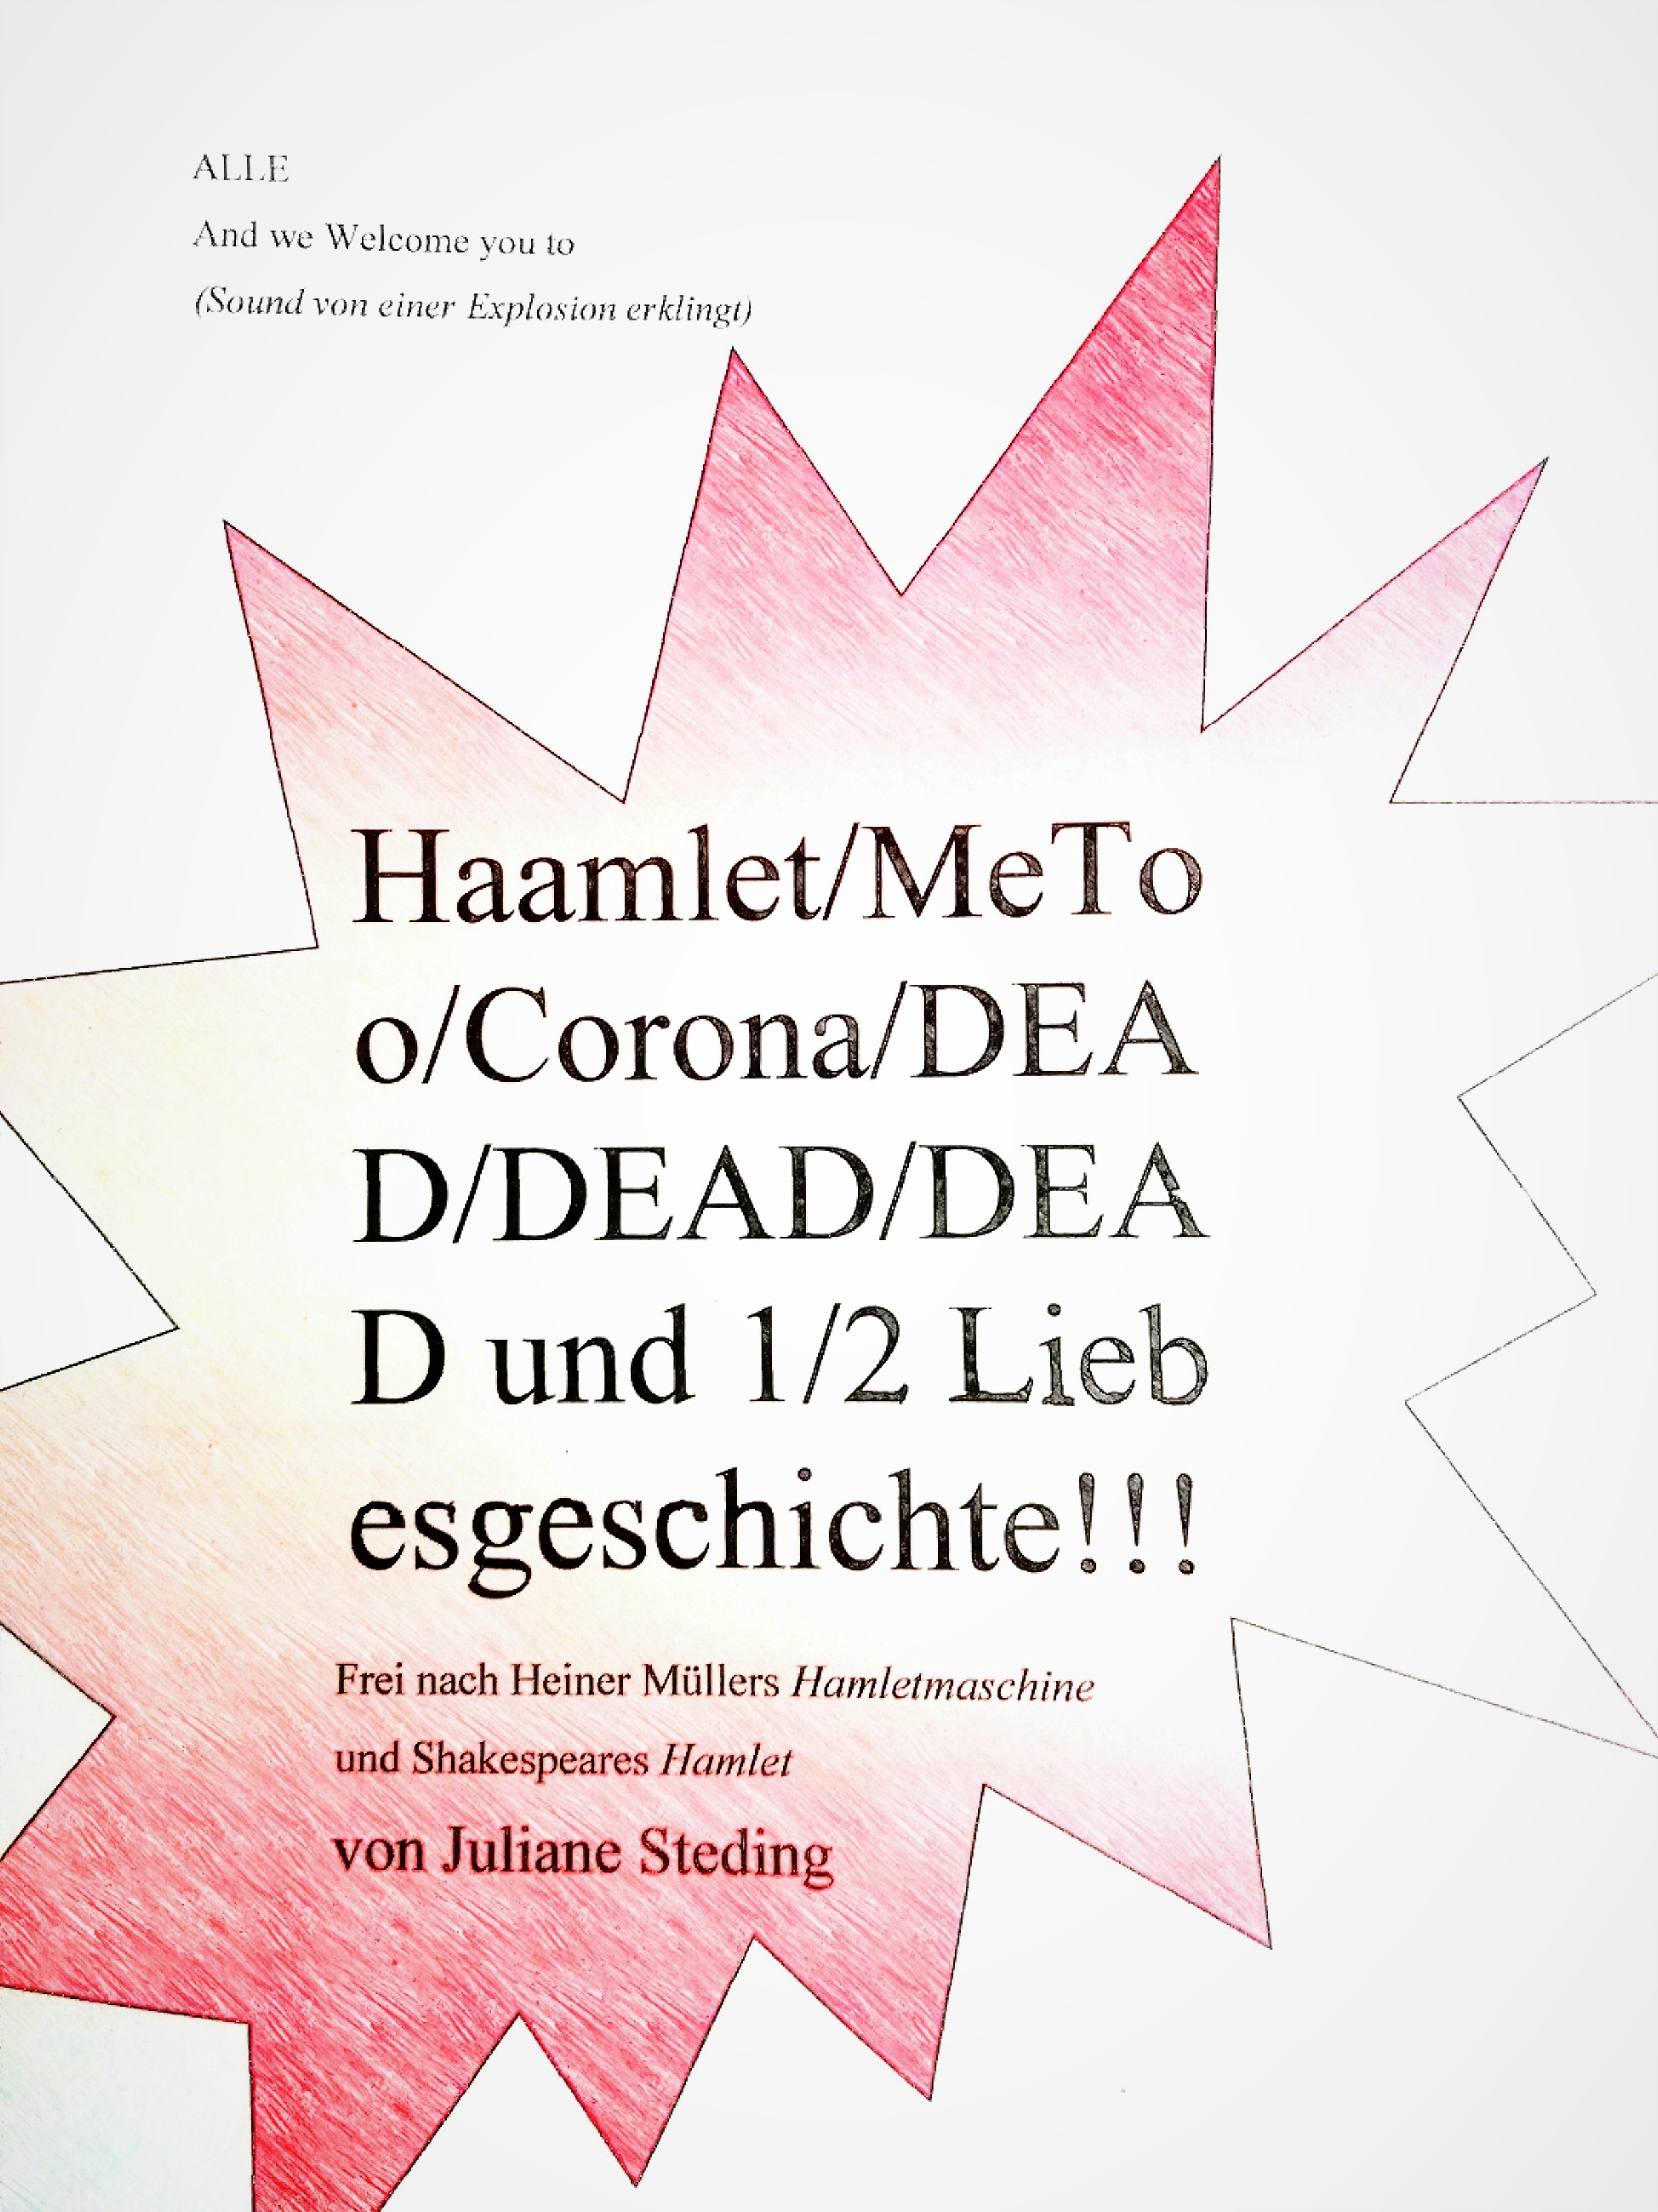 Haamlet/MeToo/Corona/DEAD/DEAD/DEAD und 1/2 Liebesgeschichte!!!